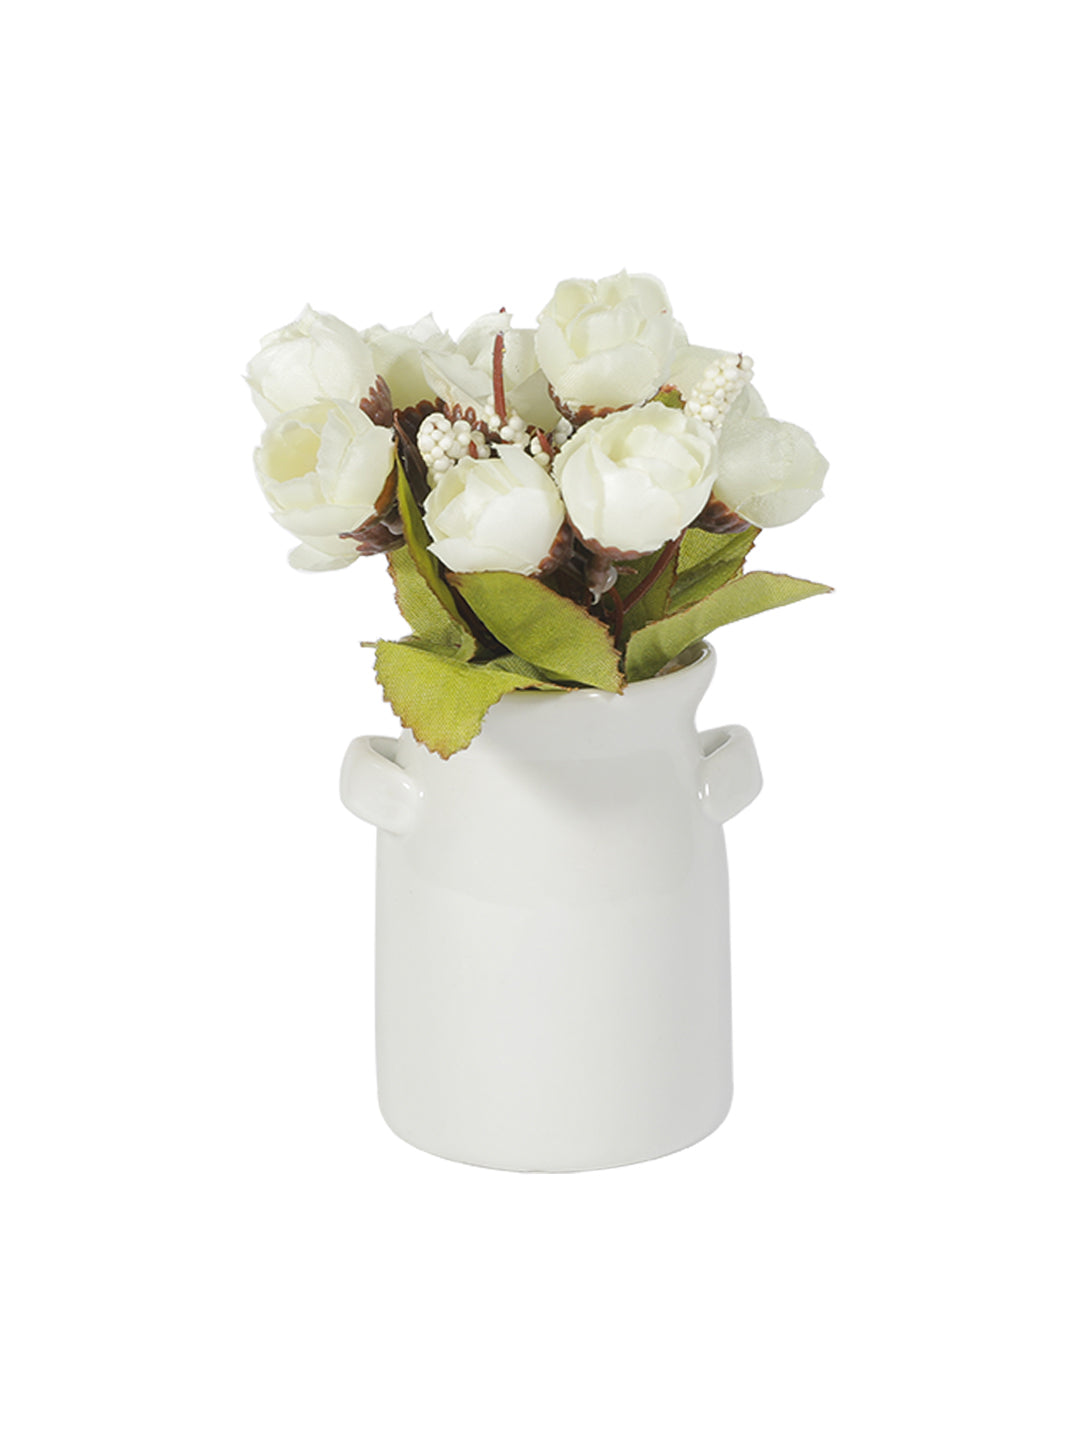 VON CASA Cylindrical Plastic Flower With Pot - White Rose White Pot